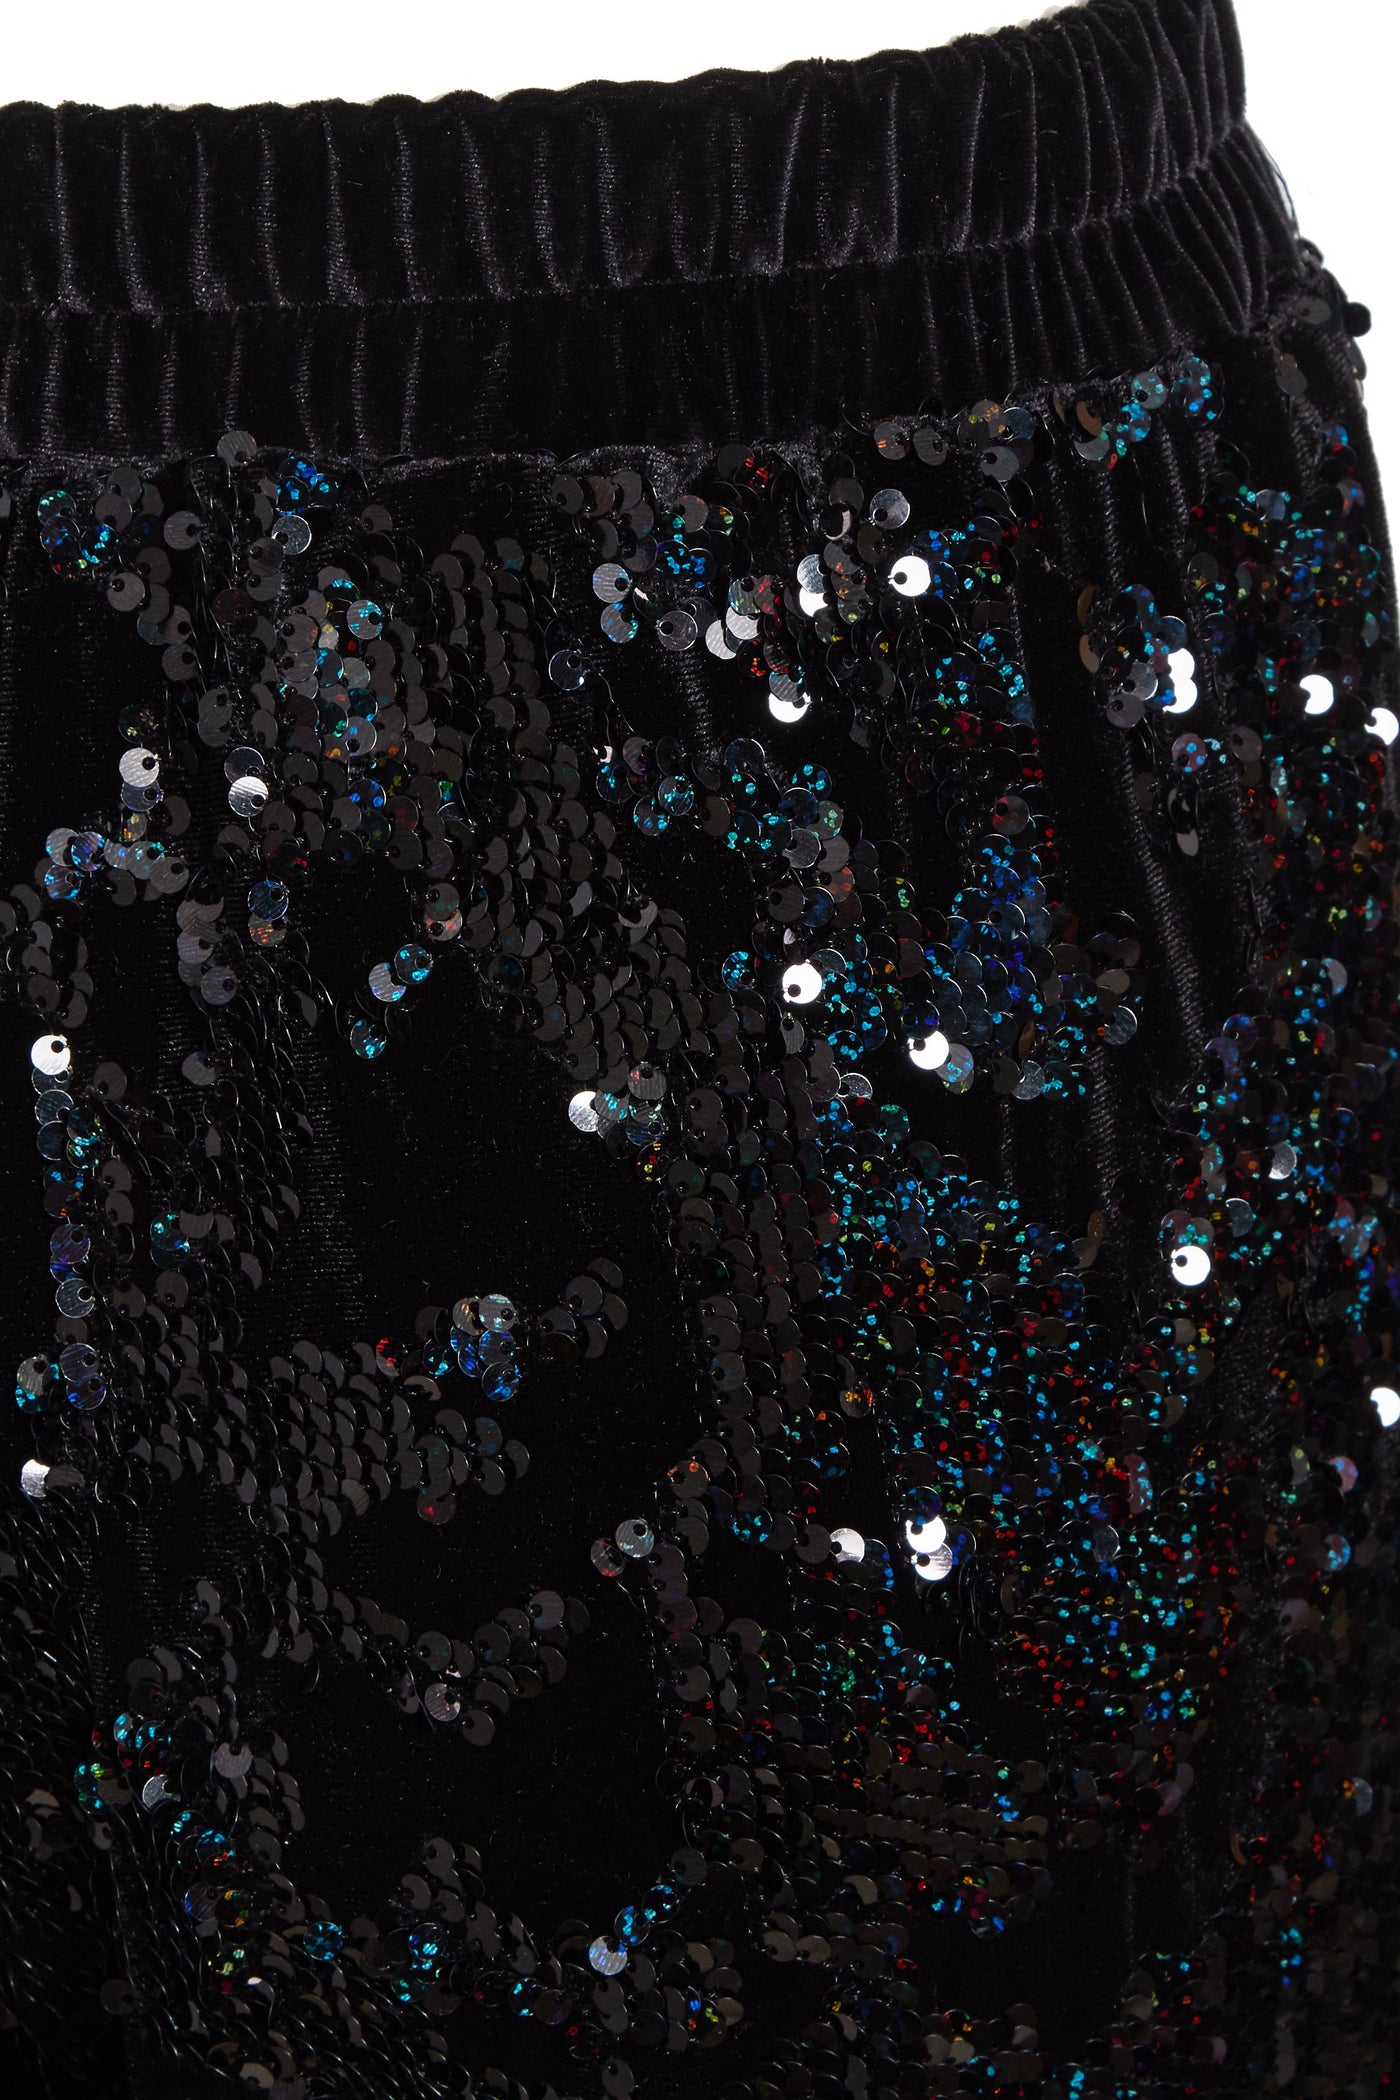 LA MIA - Sequin Black Velvet Floor-Length Wide Leg Trousers